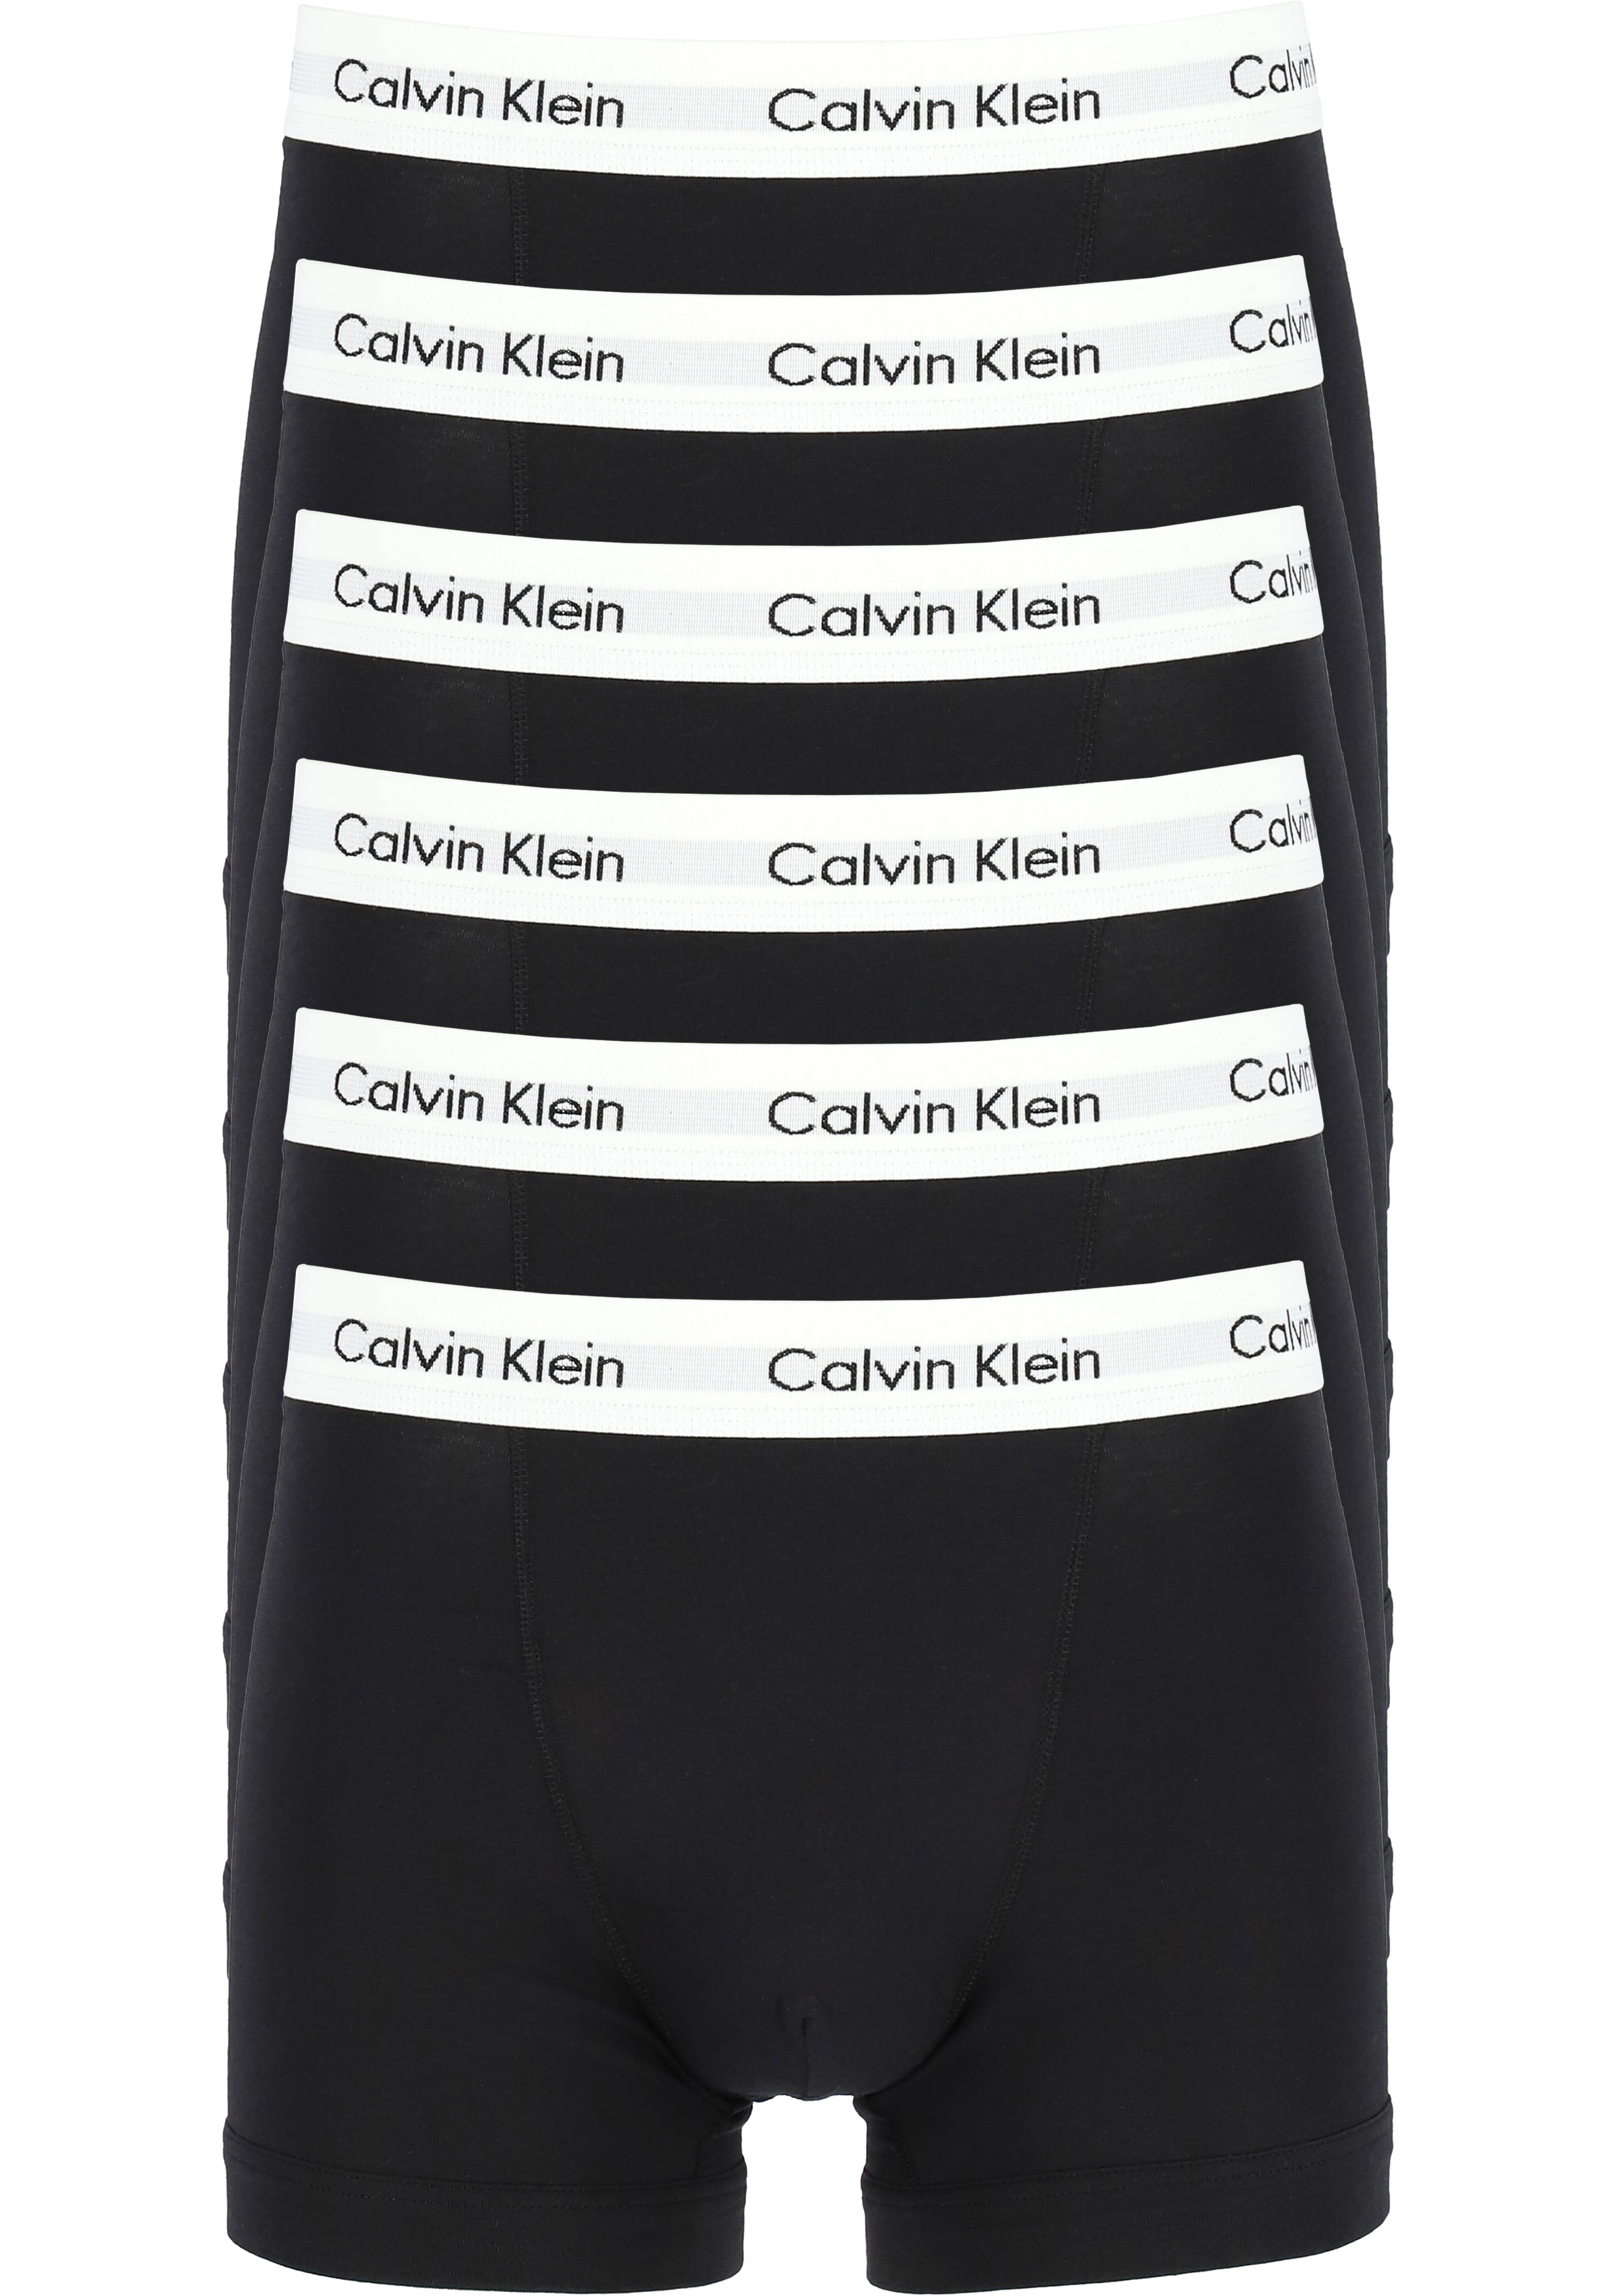 Actie 6-pack: Calvin Klein trunks, boxers normale lengte, zwart - Zomer SALE tot 50% korting